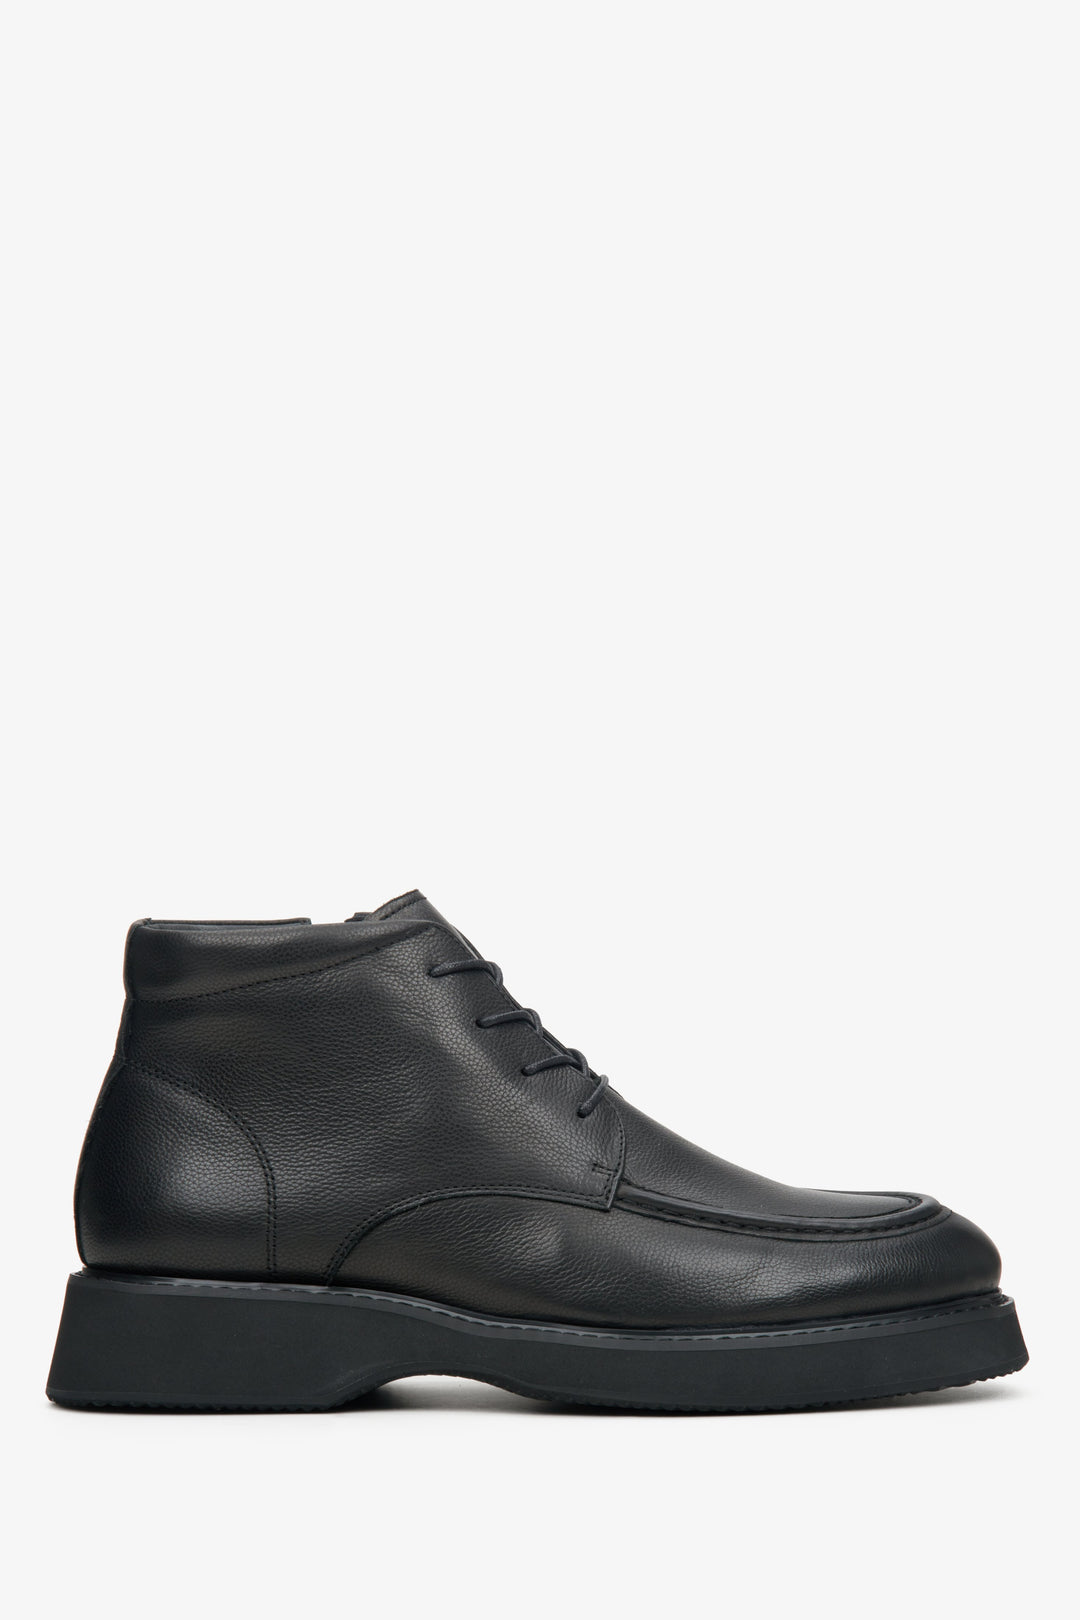 Men's Black Lace-up Boots made of Genuine Leather Estro ER00114226.